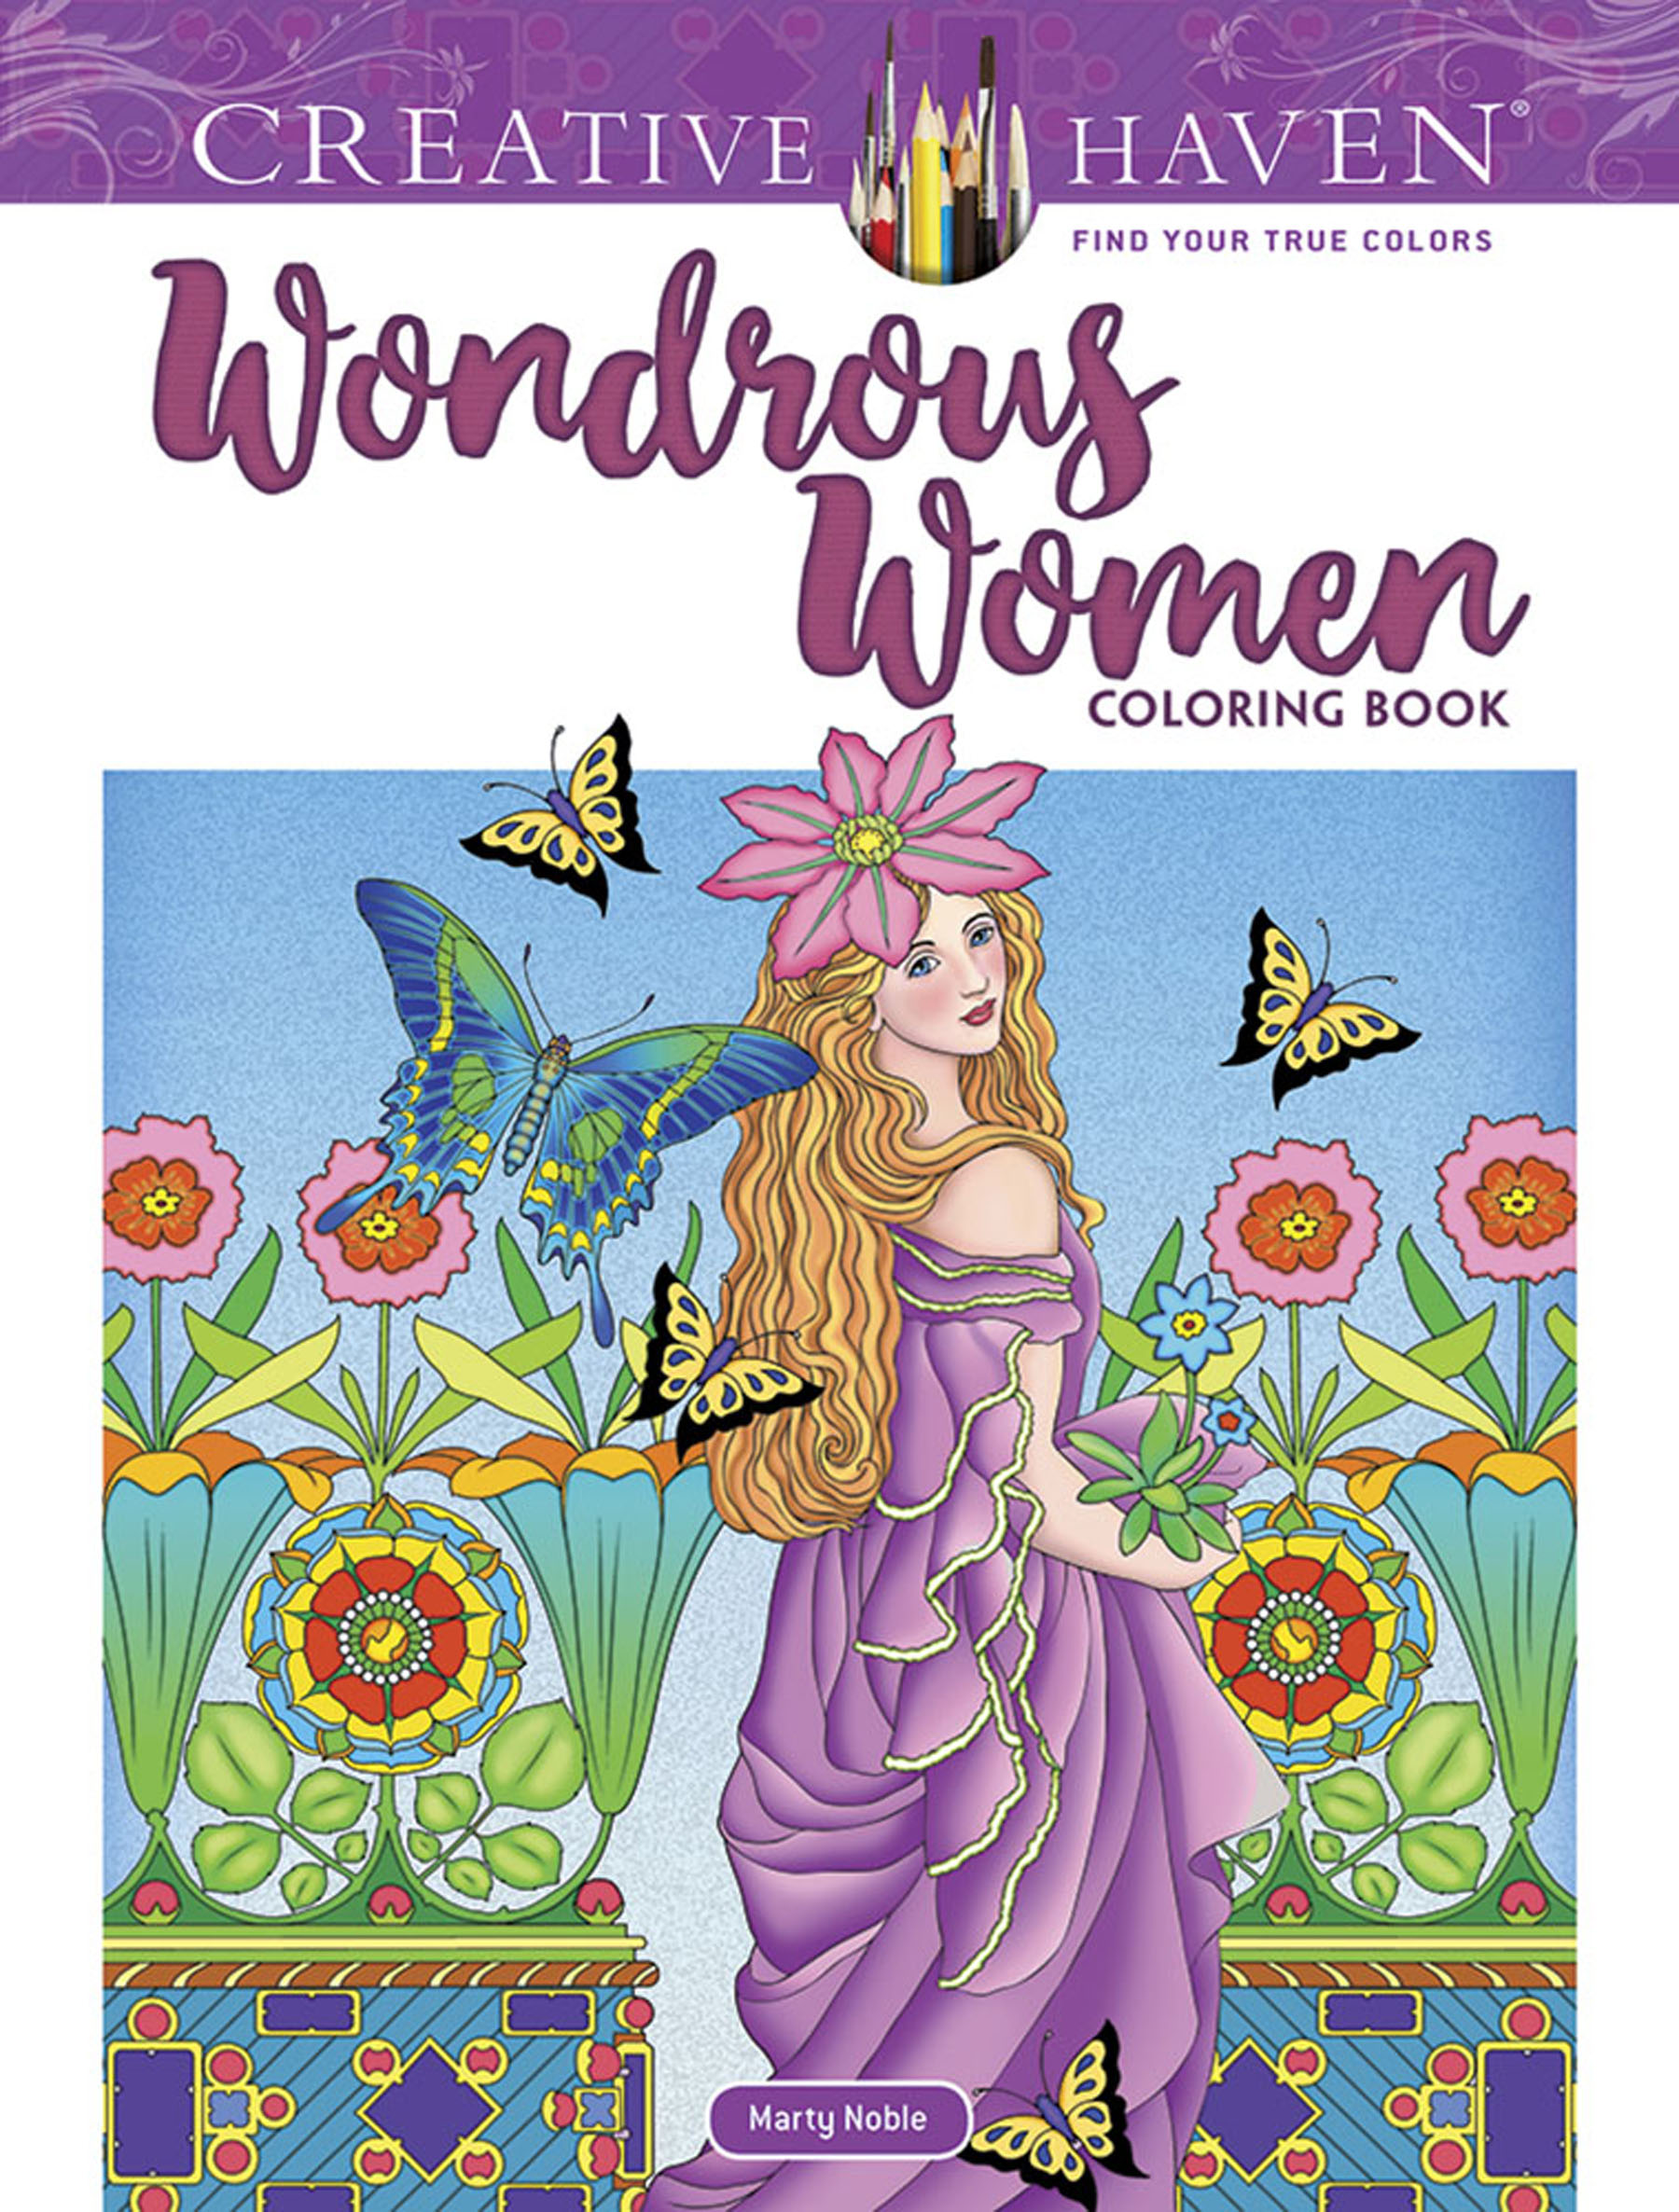 Creative Haven Wondrous Women Coloring Book